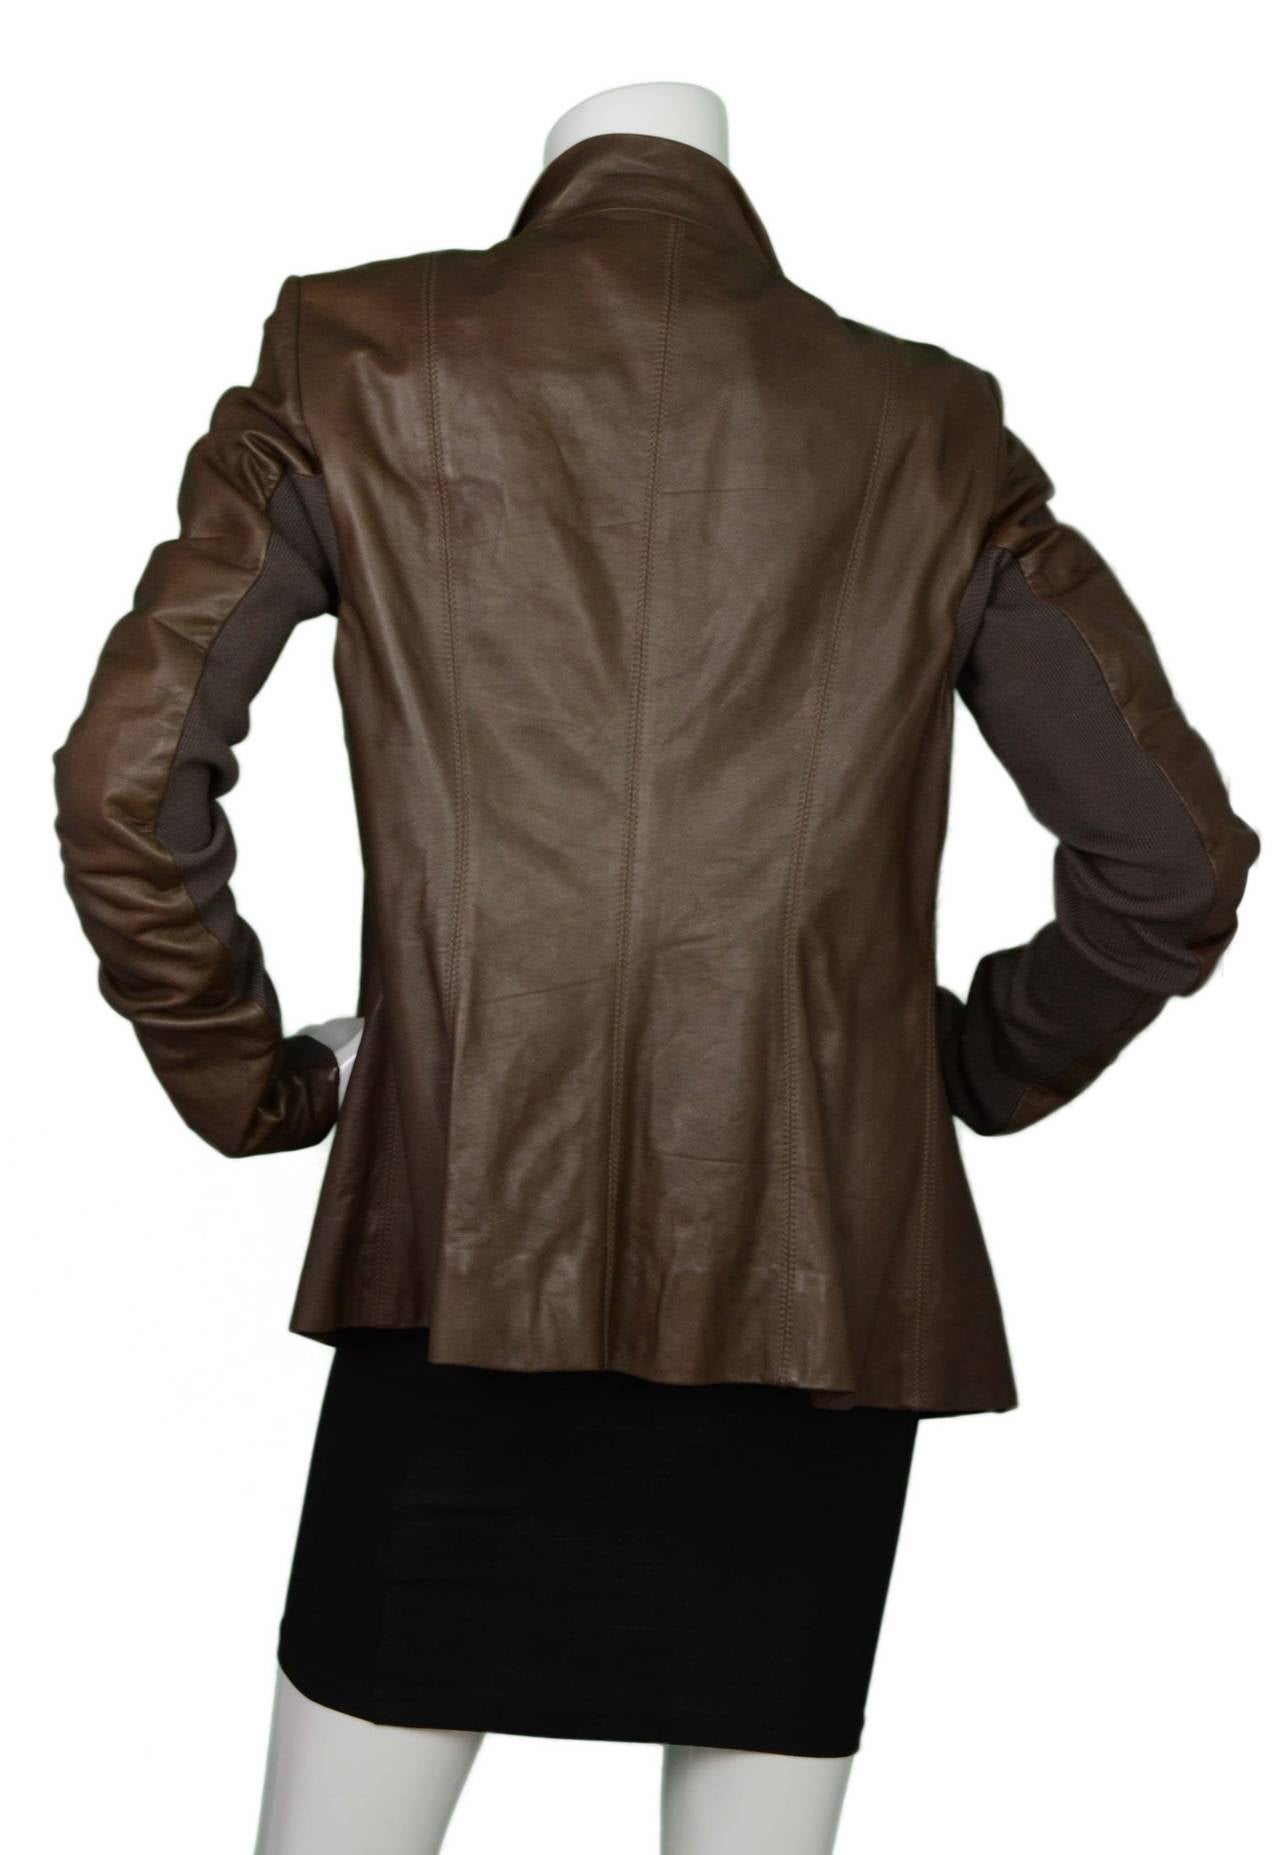 Women's Rick Owens Brown Leather Asymmetrical Leather Jacket sz 44